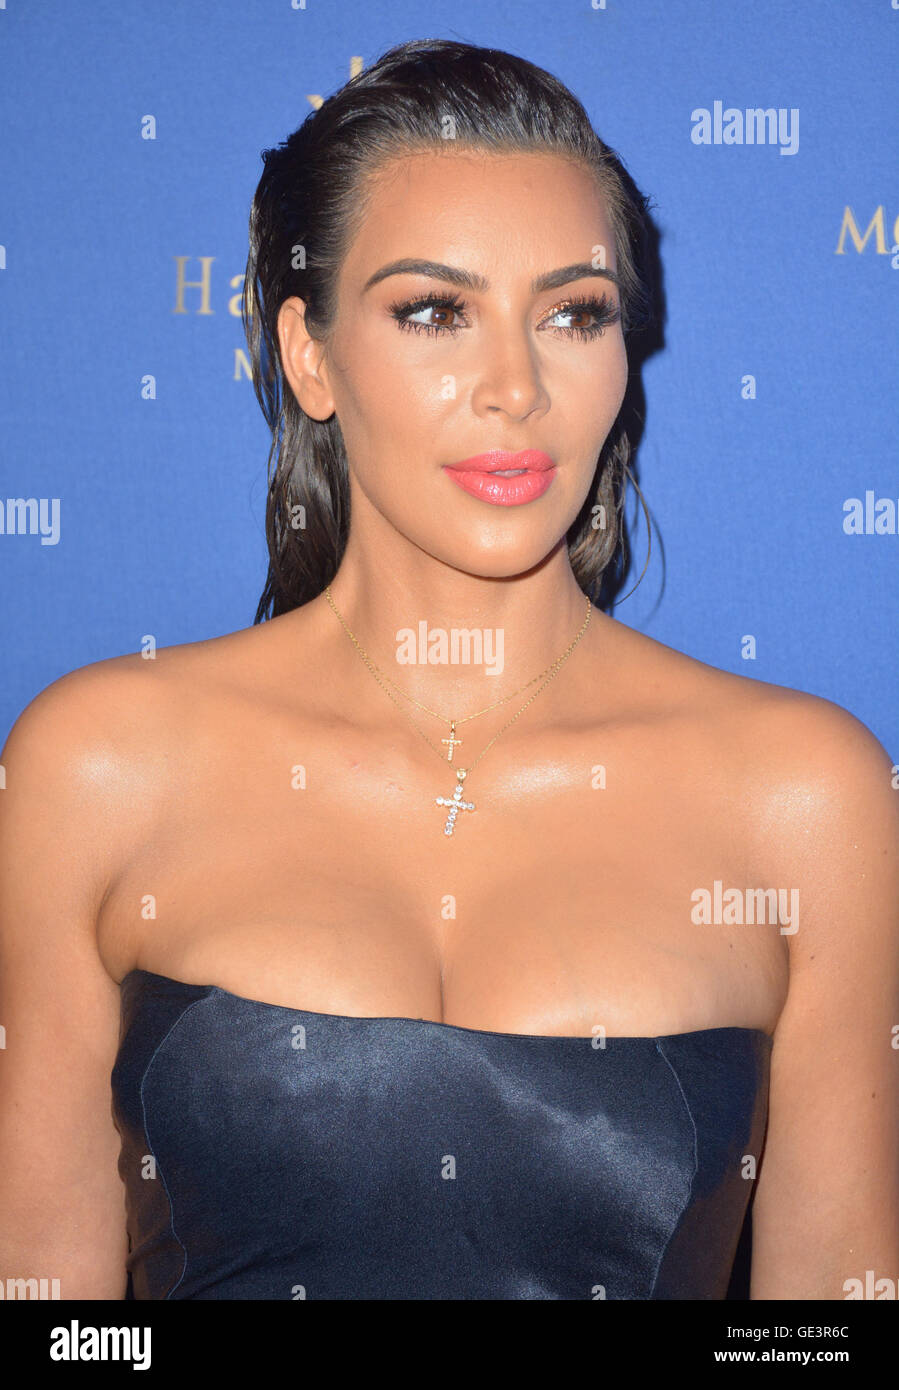 Las Vegas, Nevada, USA. 22 Luglio, 2016. Kim Kardashian ospita Hakkasan Nightclub sulla luglio 22, 2016 all'interno del MGM Grand Hotel & Casinoi in Las Vegas NV DI CREDITO: Marcel Thomas/ZUMA filo/Alamy Live News Foto Stock